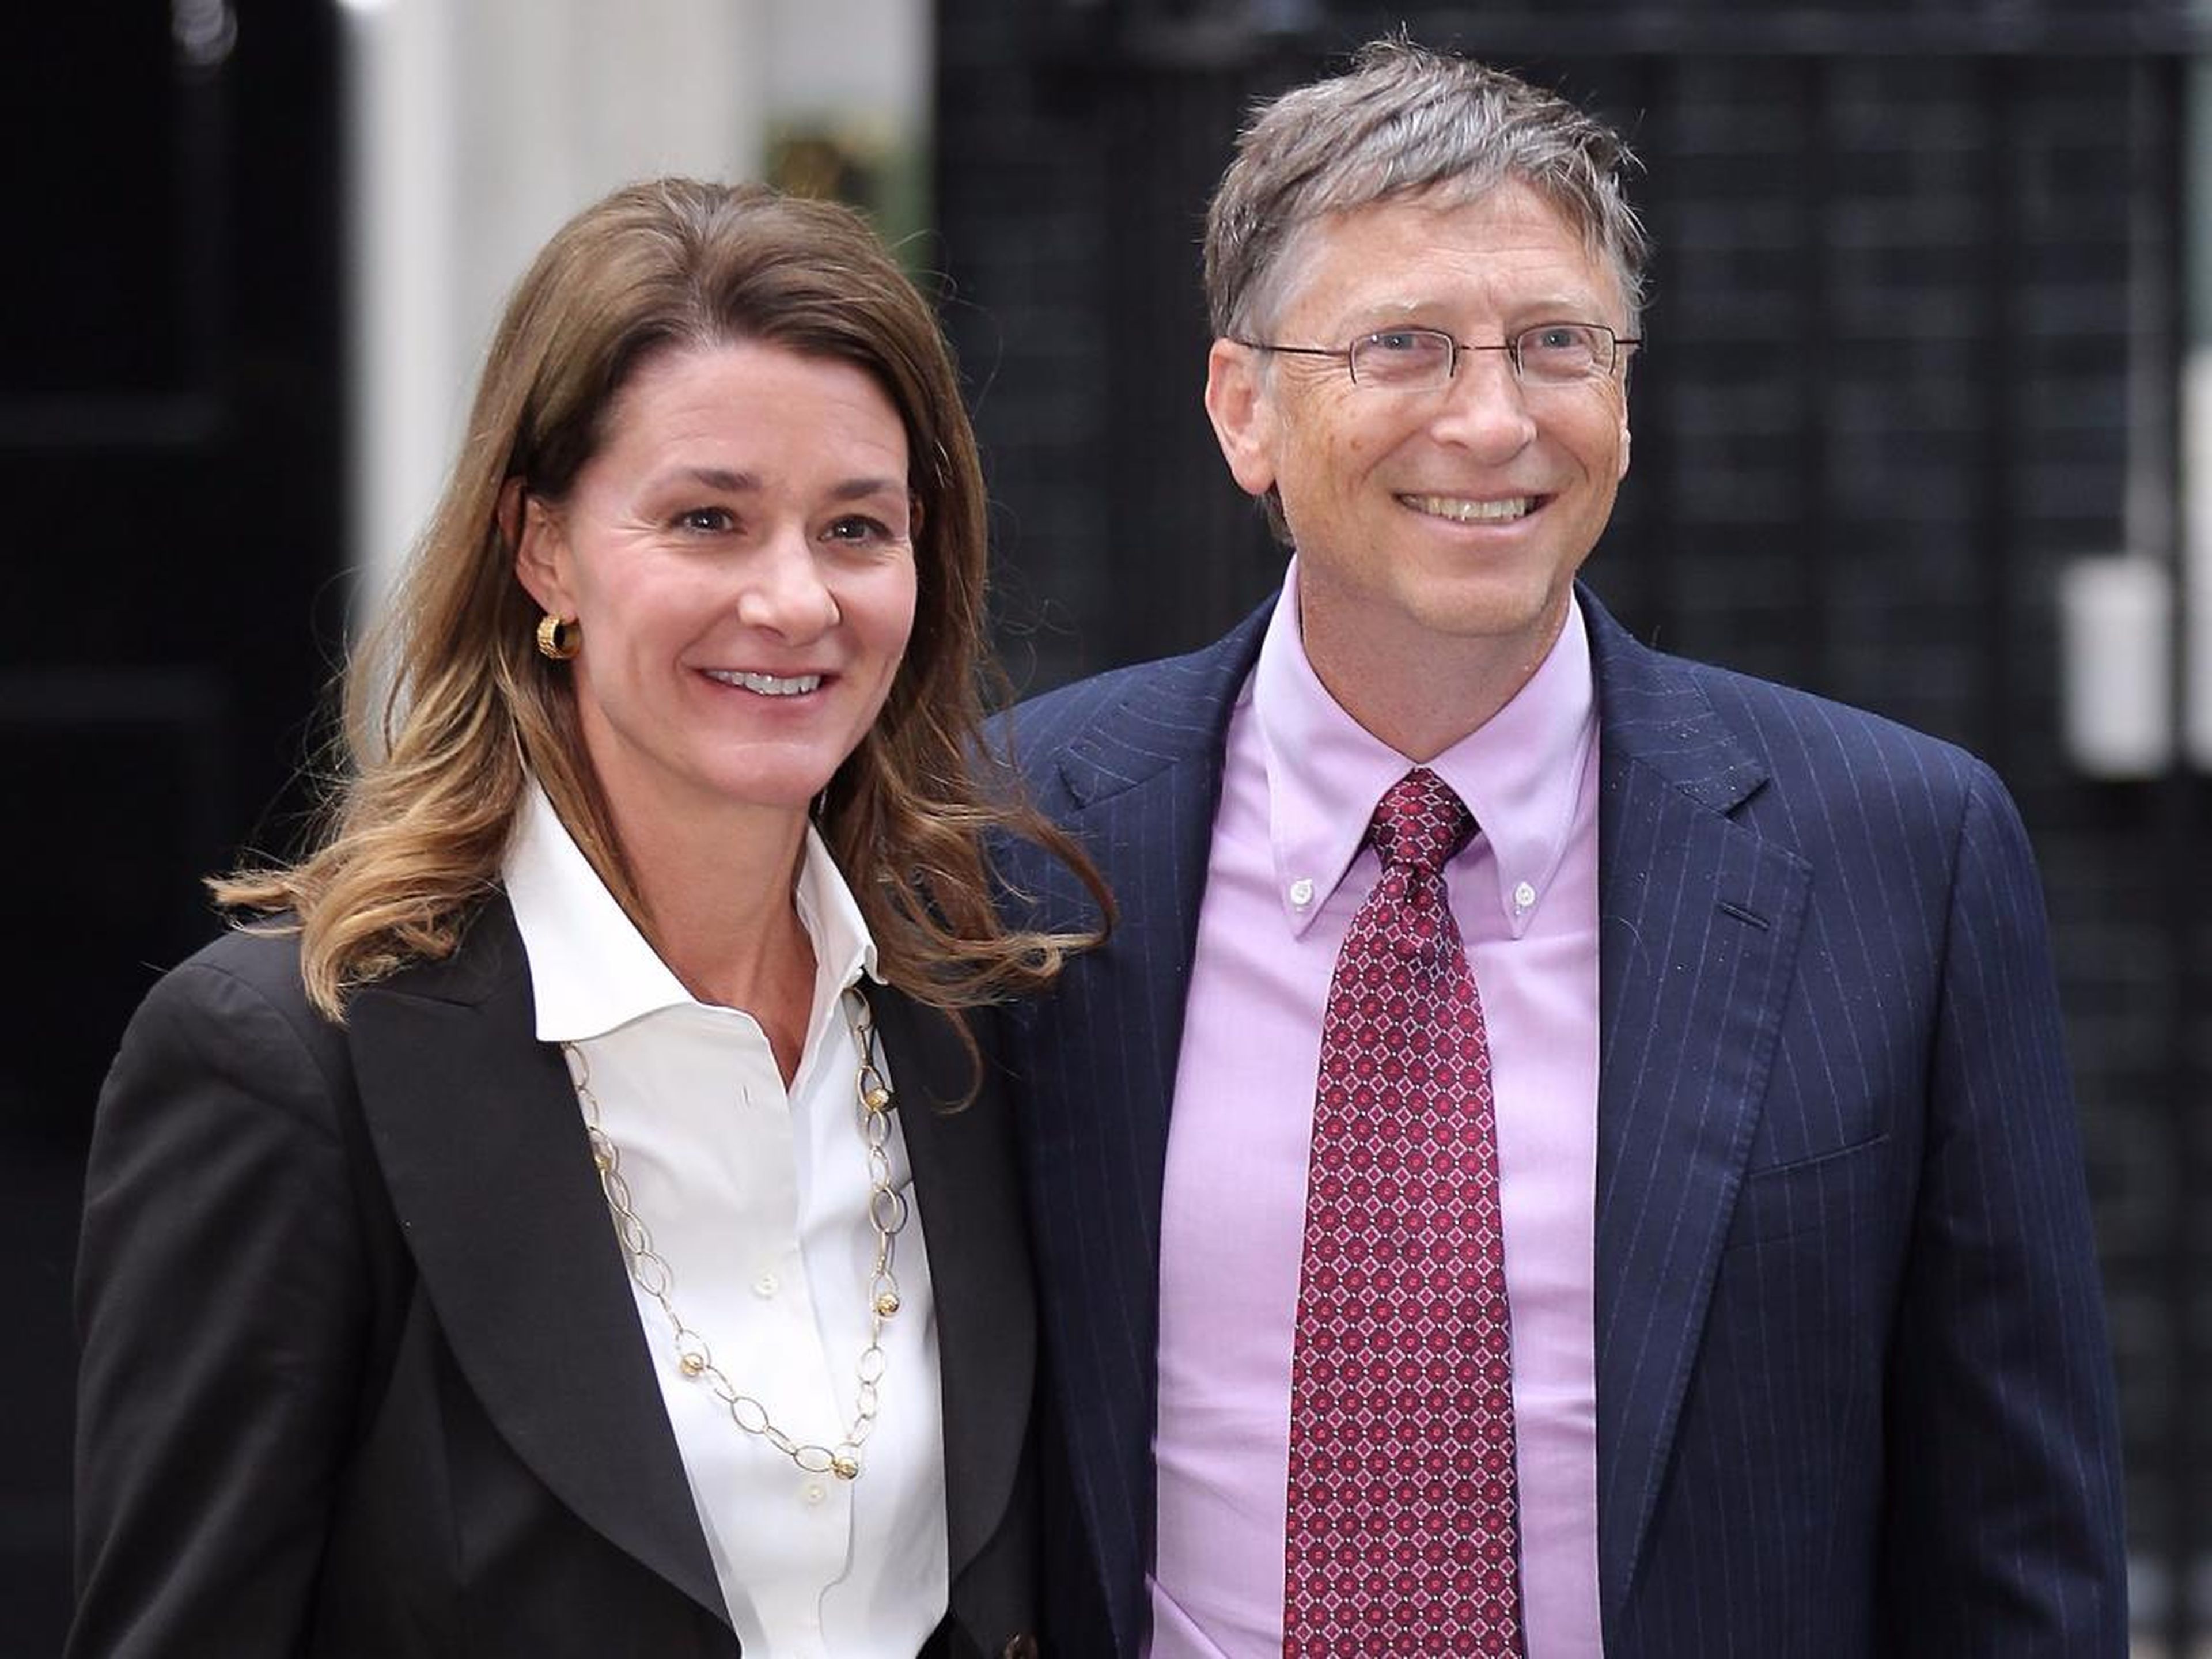 Жена билла гейтса. Билл и Мелинда Гейтс в молодости. Билл Гейтс и Мелинда. Мелинда Гейтс в молодости. Жена Билла Гейтса Мелинда.